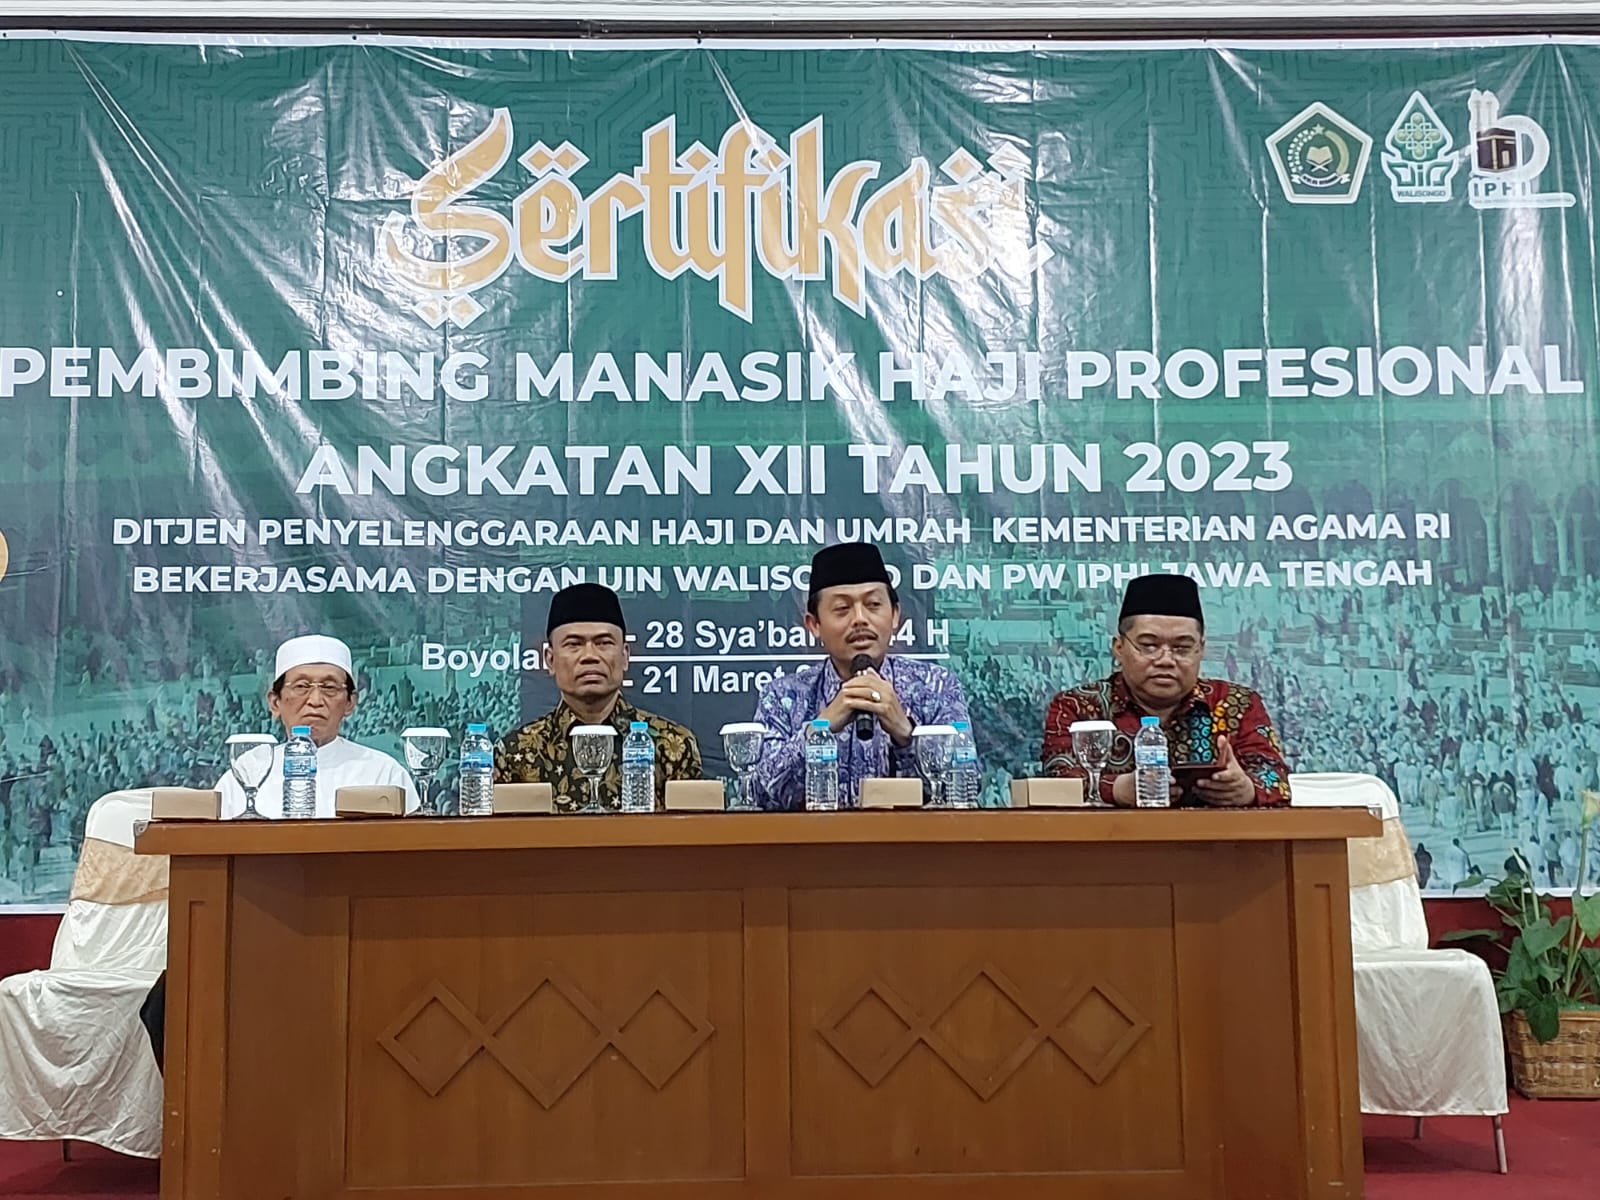 Kakanwil Buka Sertifikasi Pembimbing Manasik Haji Profesional Angkatan XII Tahun 2023 – Kantor Wilayah Kementerian Agama Provinsi Jawa Tengah